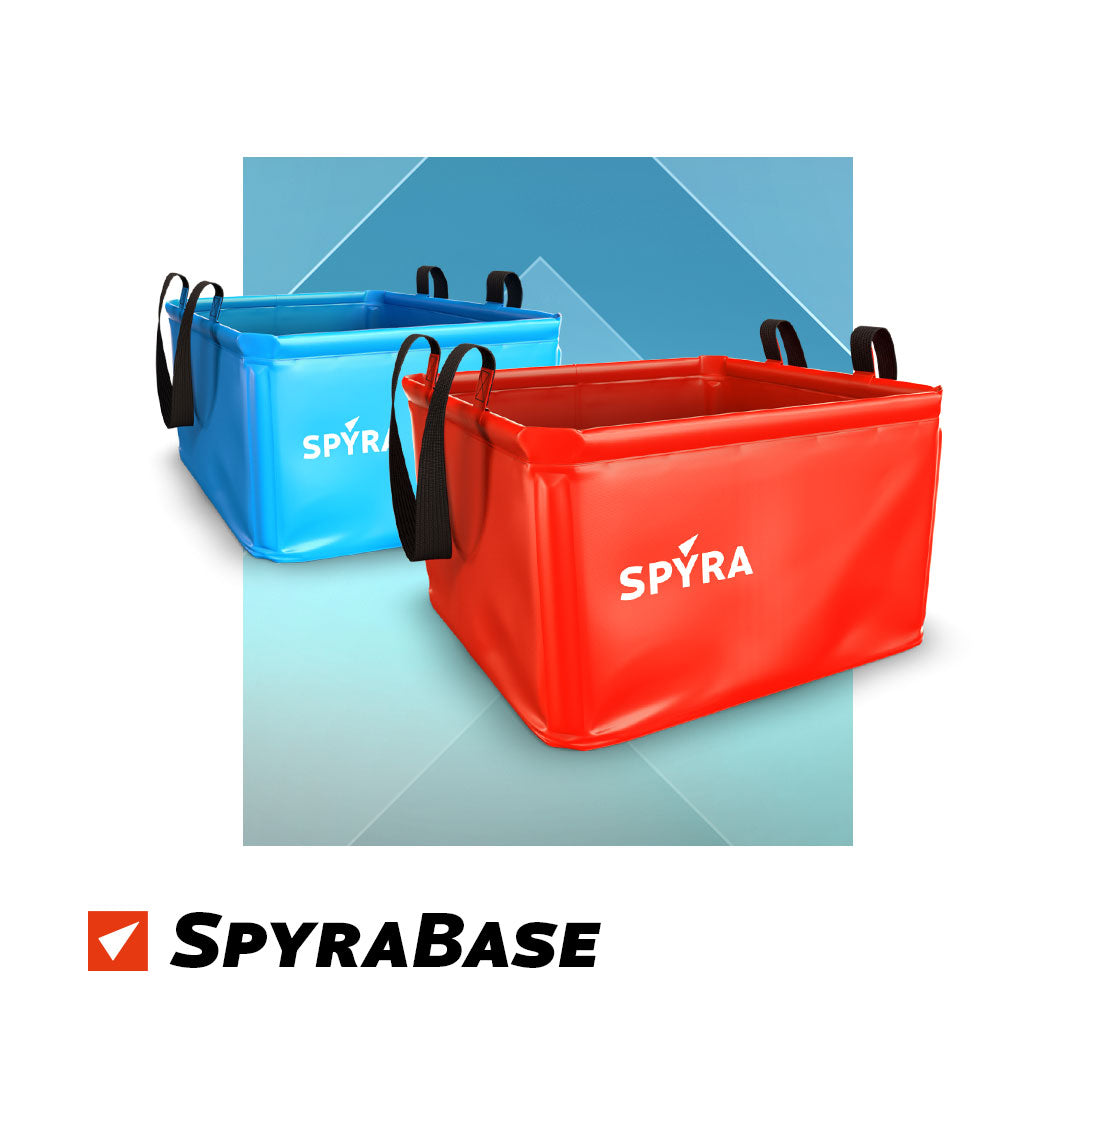 Spyra Two Electronic Water Gun Super Blaster, Battery for 2000